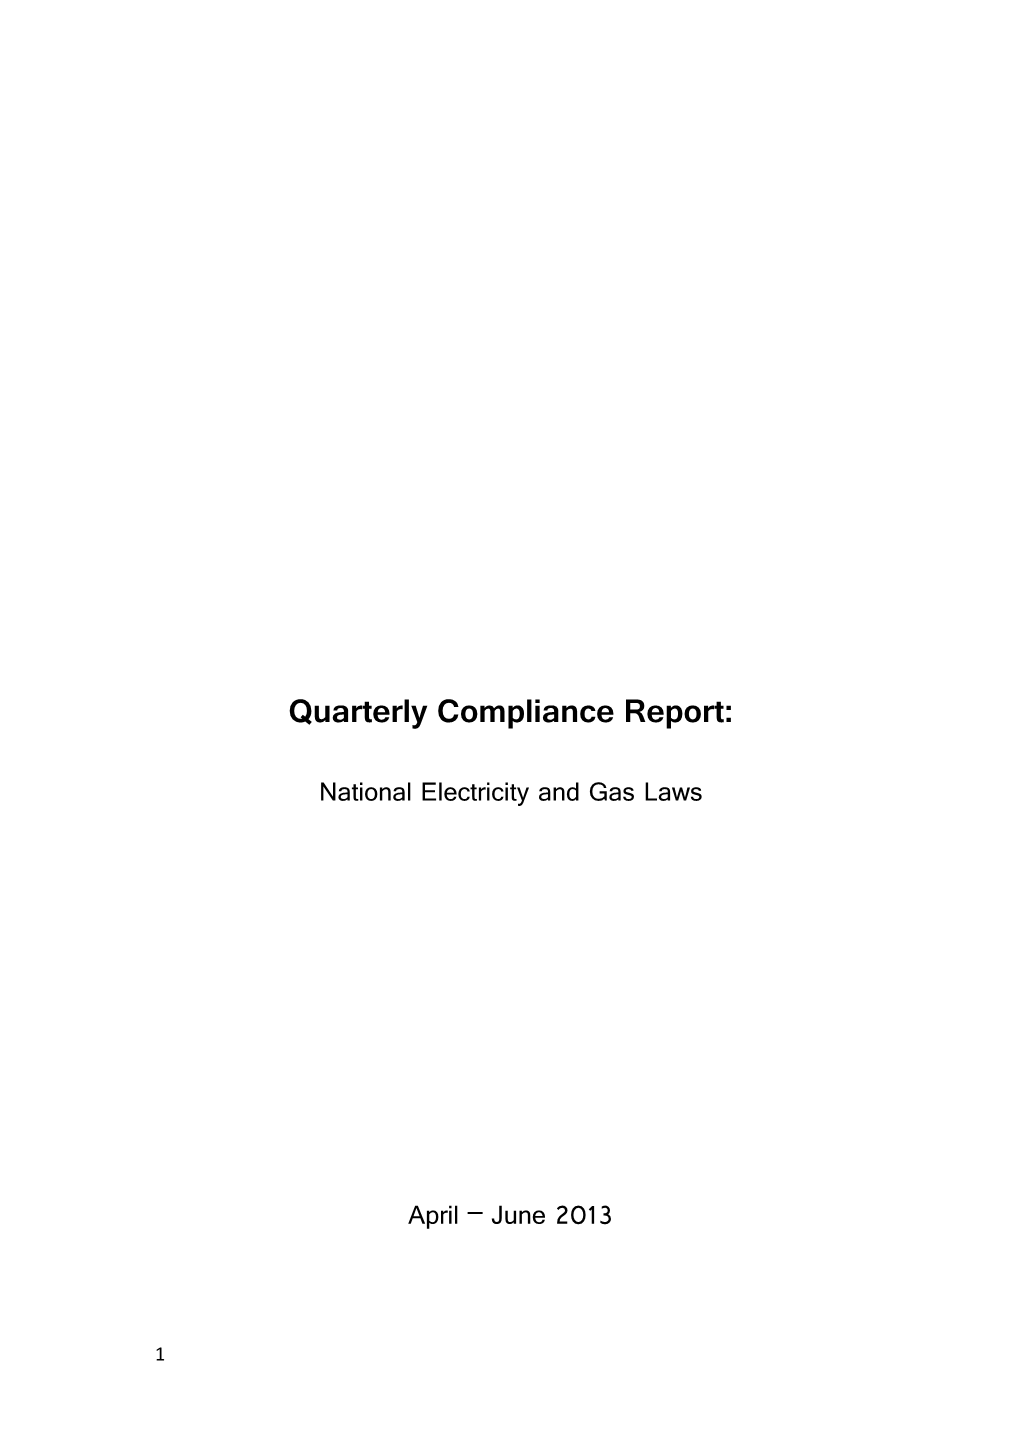 Quarterly Compliance Report - June 2013